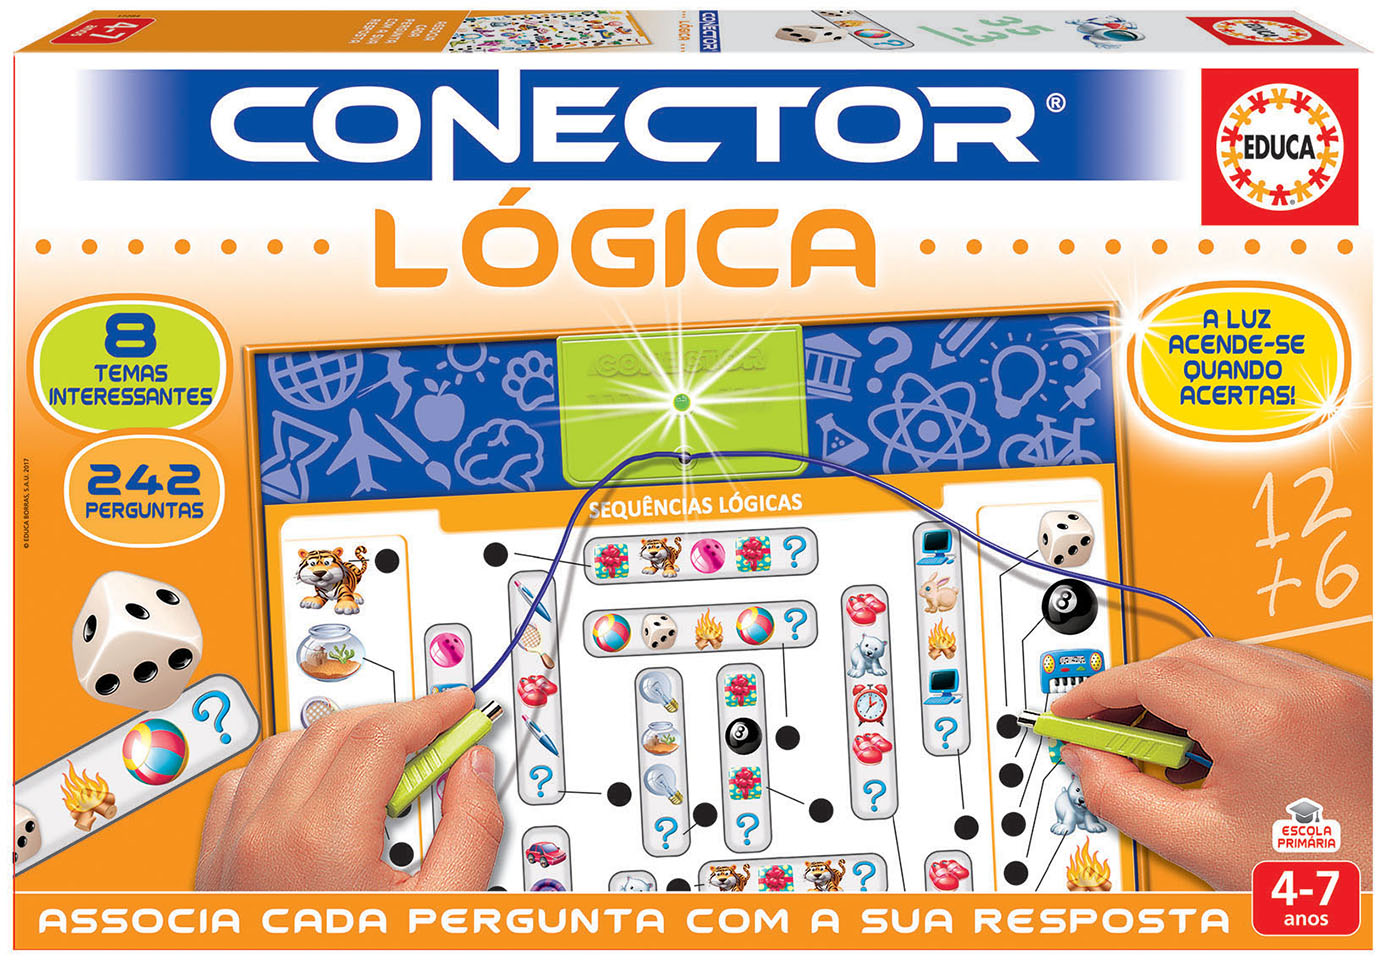 Conector® Lógica